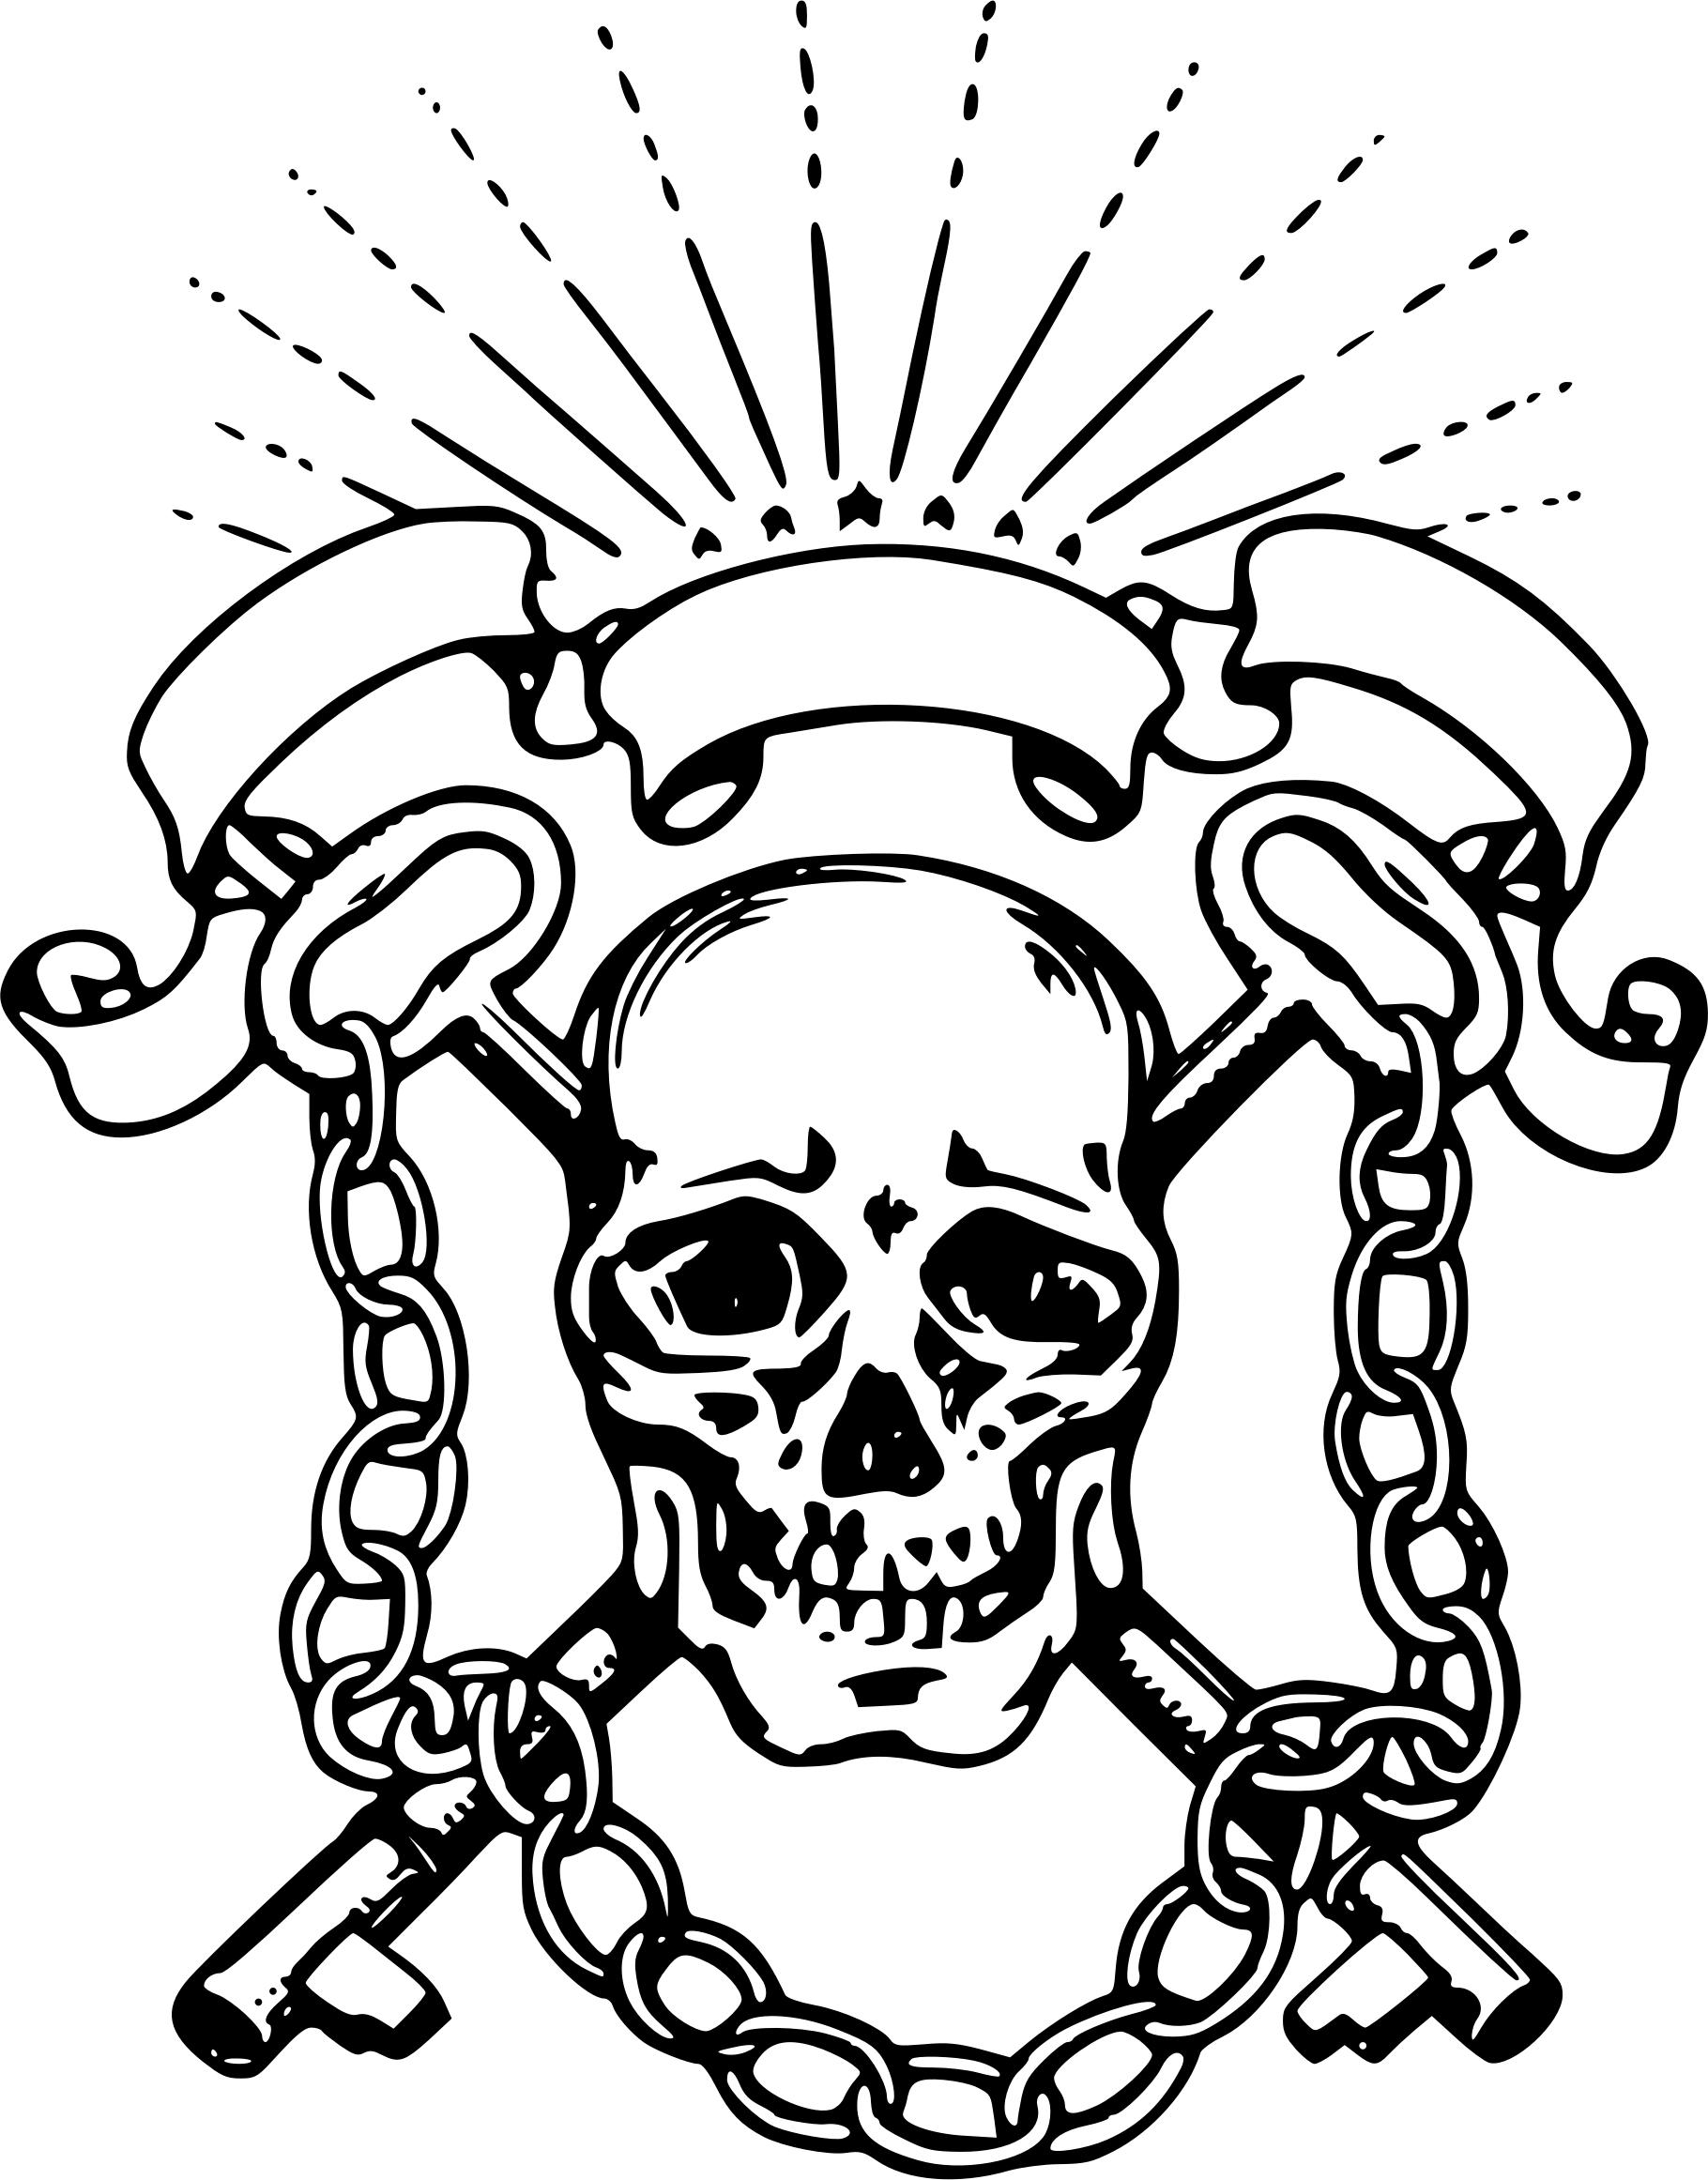 Skull and Keys Emblem png